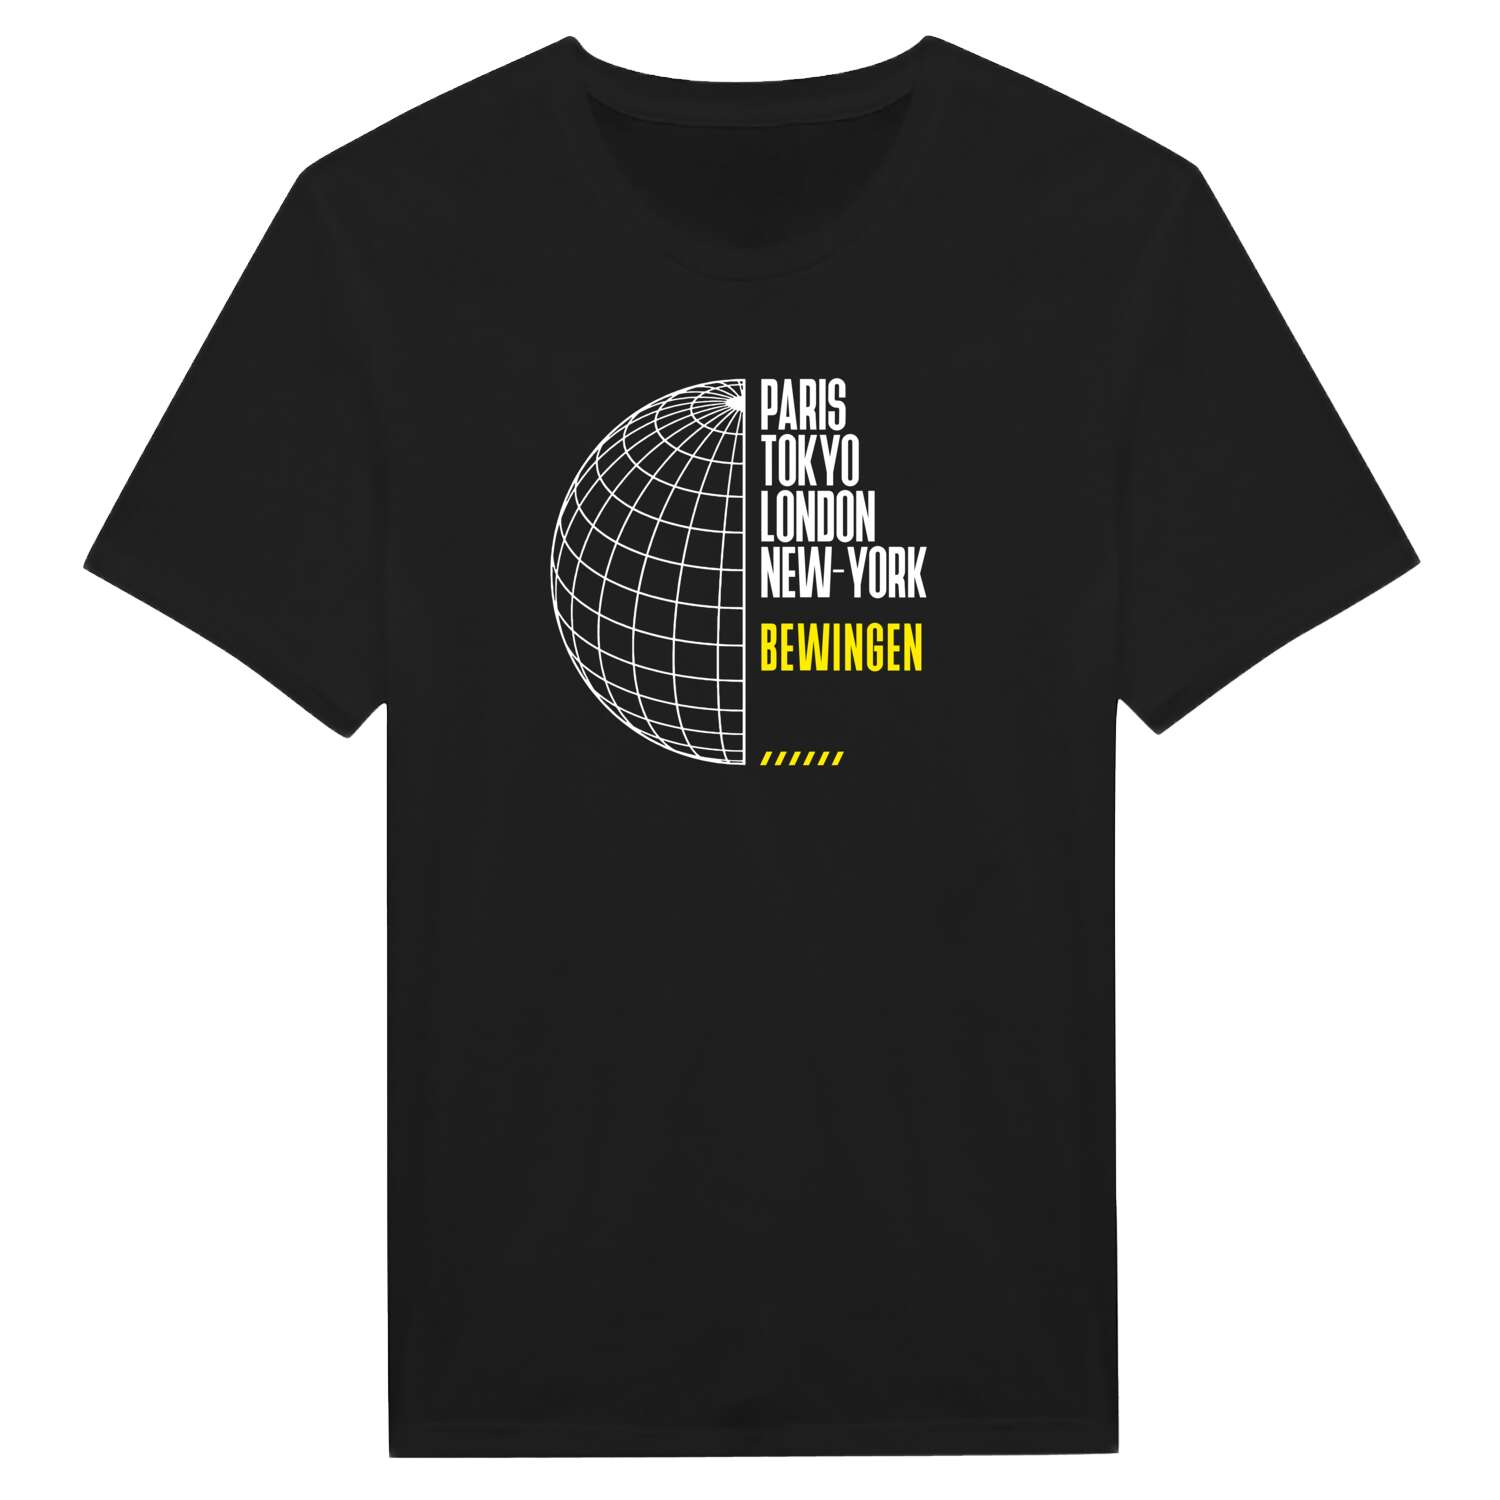 Bewingen T-Shirt »Paris Tokyo London«